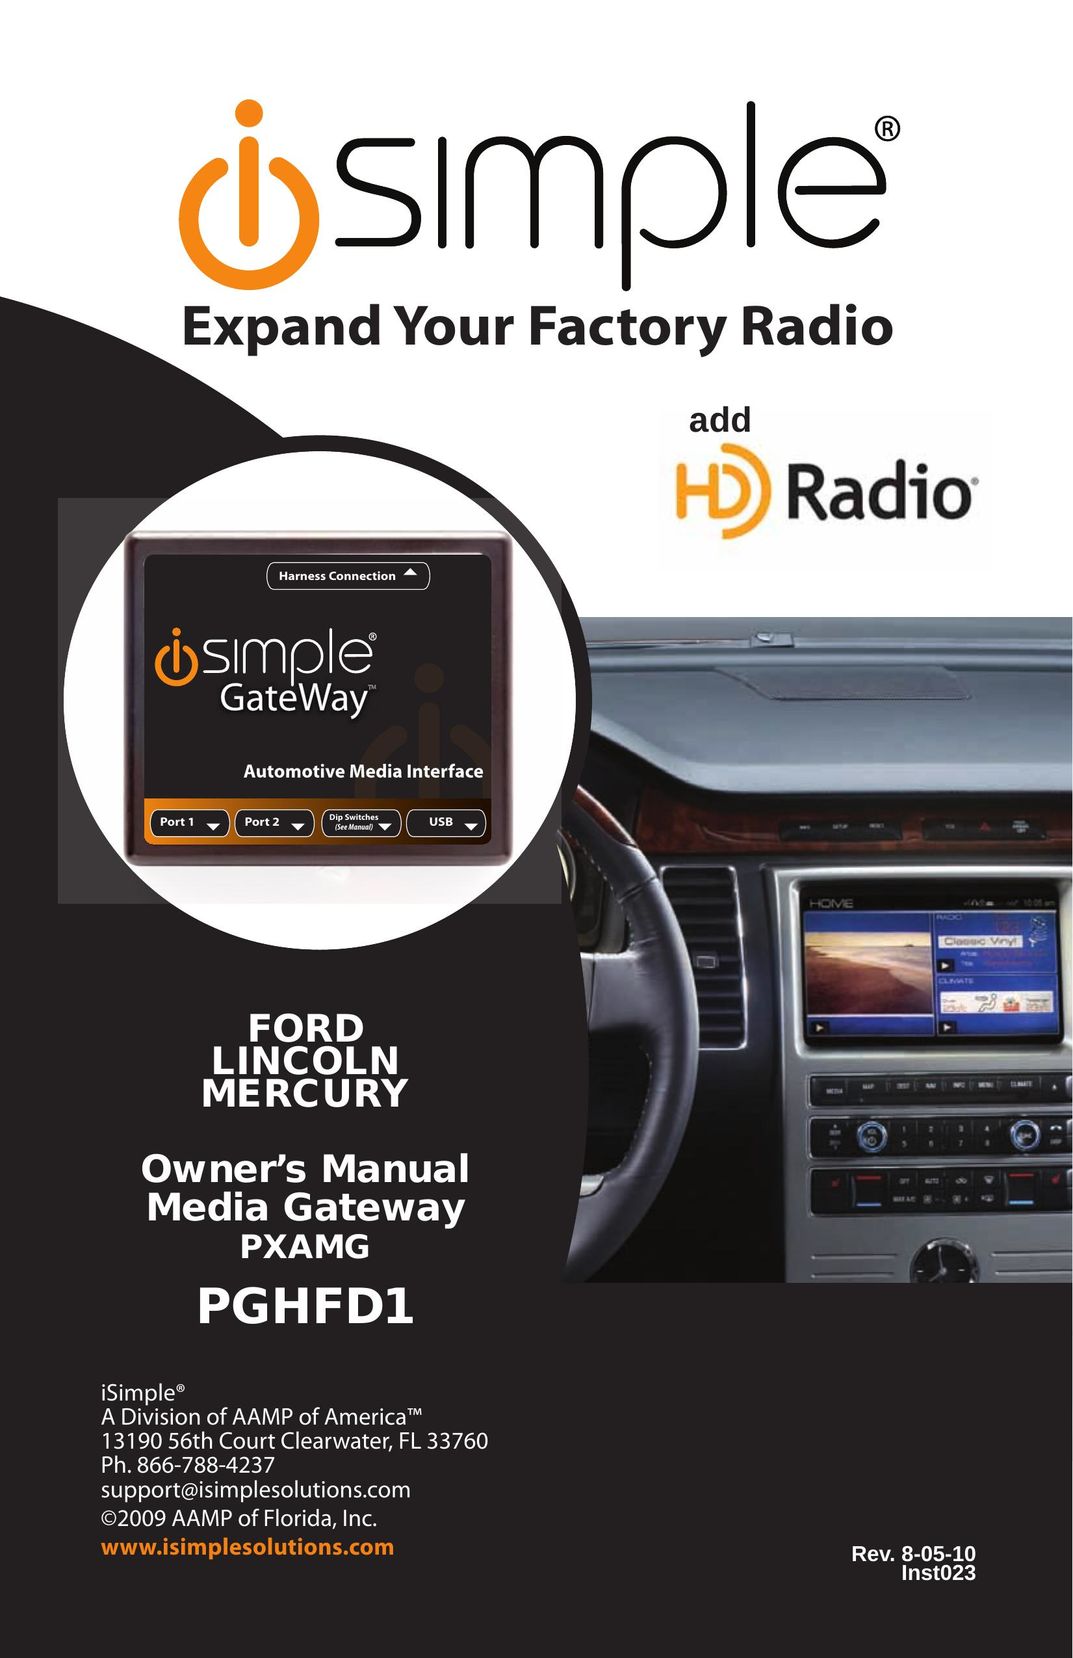 iSimple PGHFD1 Car Satellite Radio System User Manual